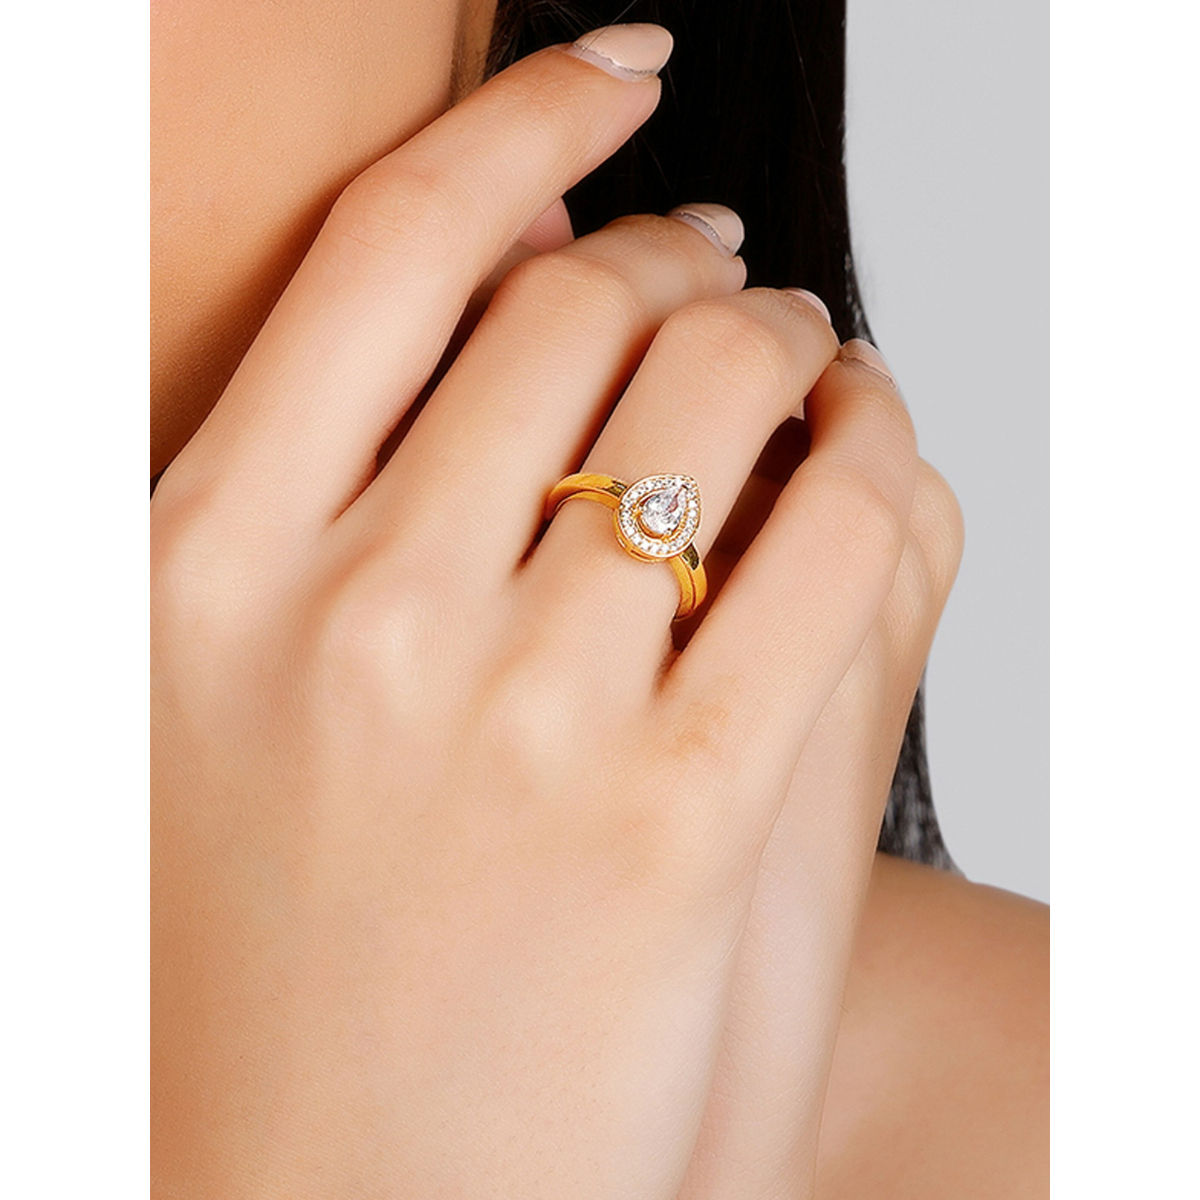 Virushka Wedding: All you need to know about Virat Kohli's custom-made ring  for Anushka Sharma!